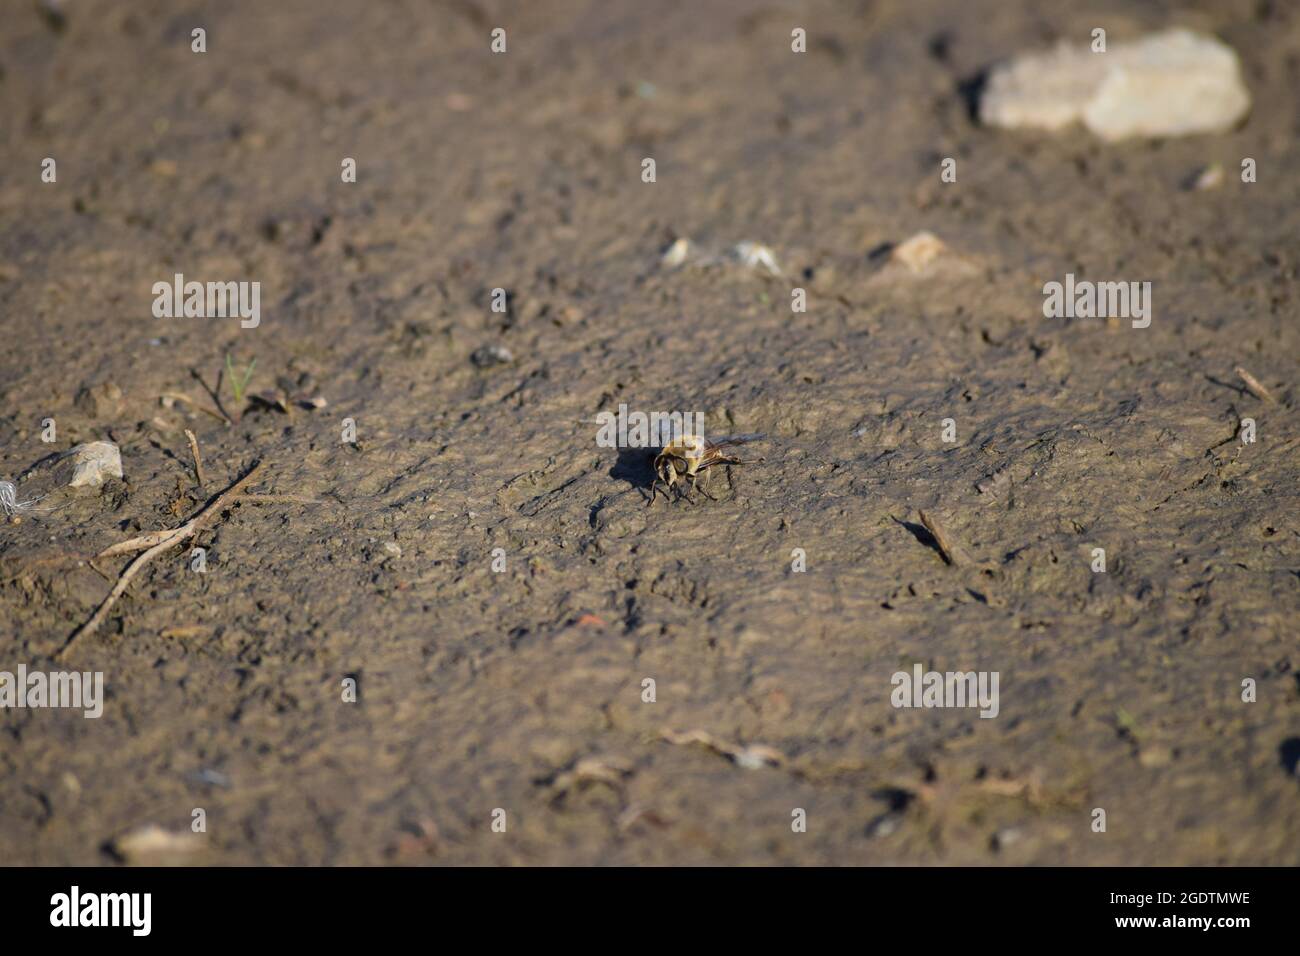 a Botfly on damp Ground Stock Photo